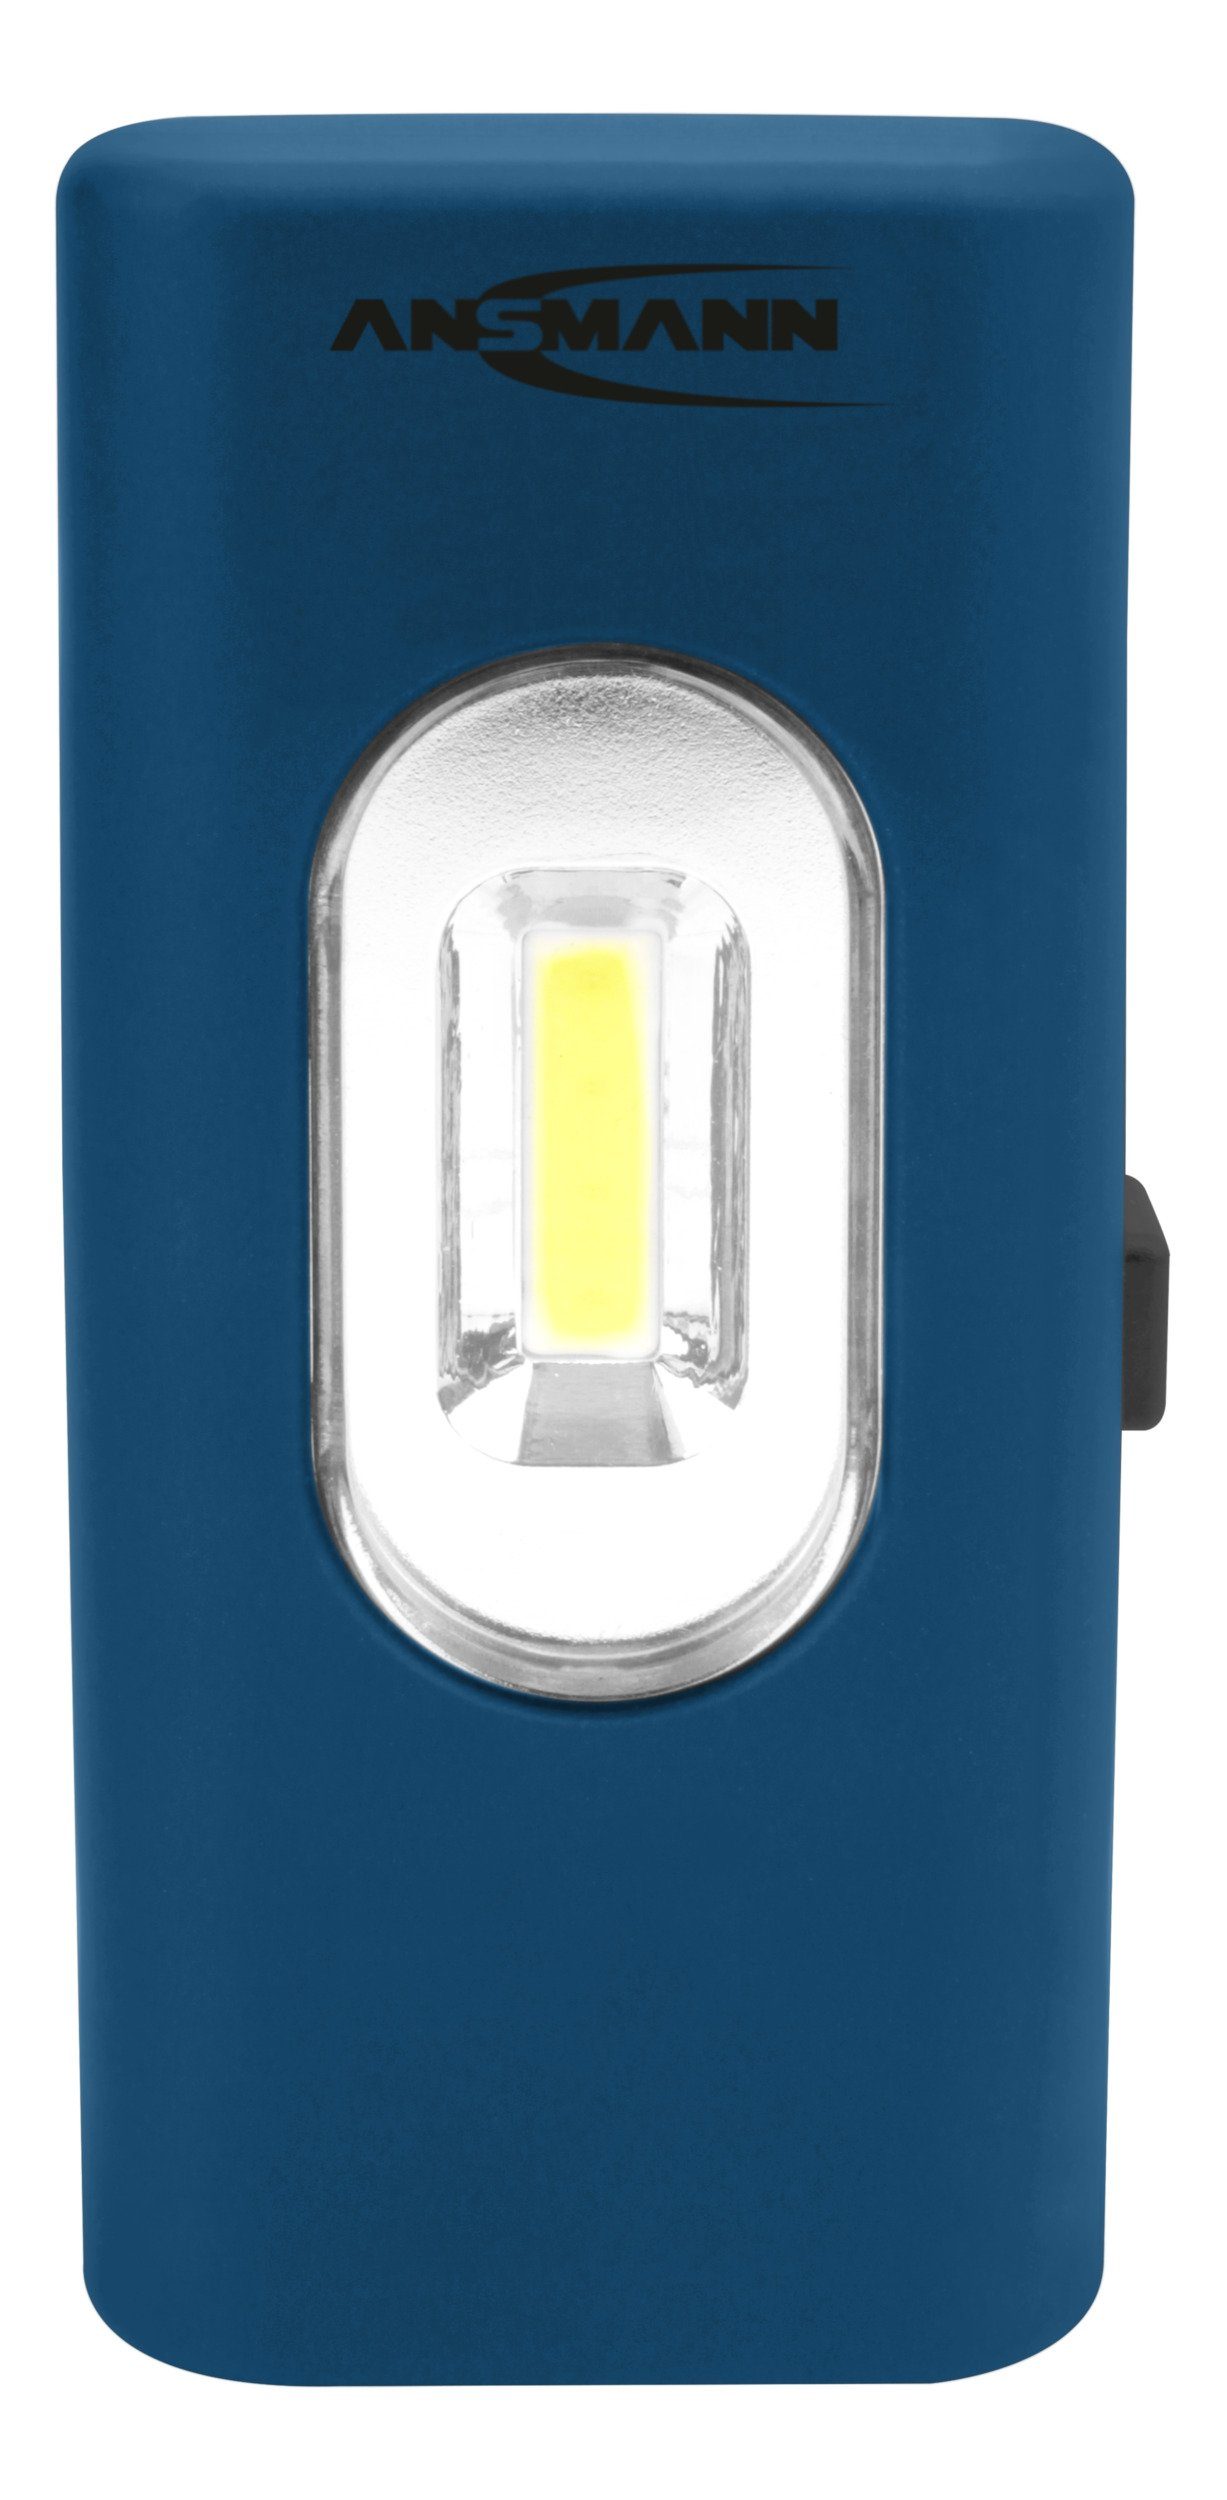 ANSMANN LED Werkstattlampe 40 Lumen inkl AAA Batterie Arbeitsleuchte/Lampe 